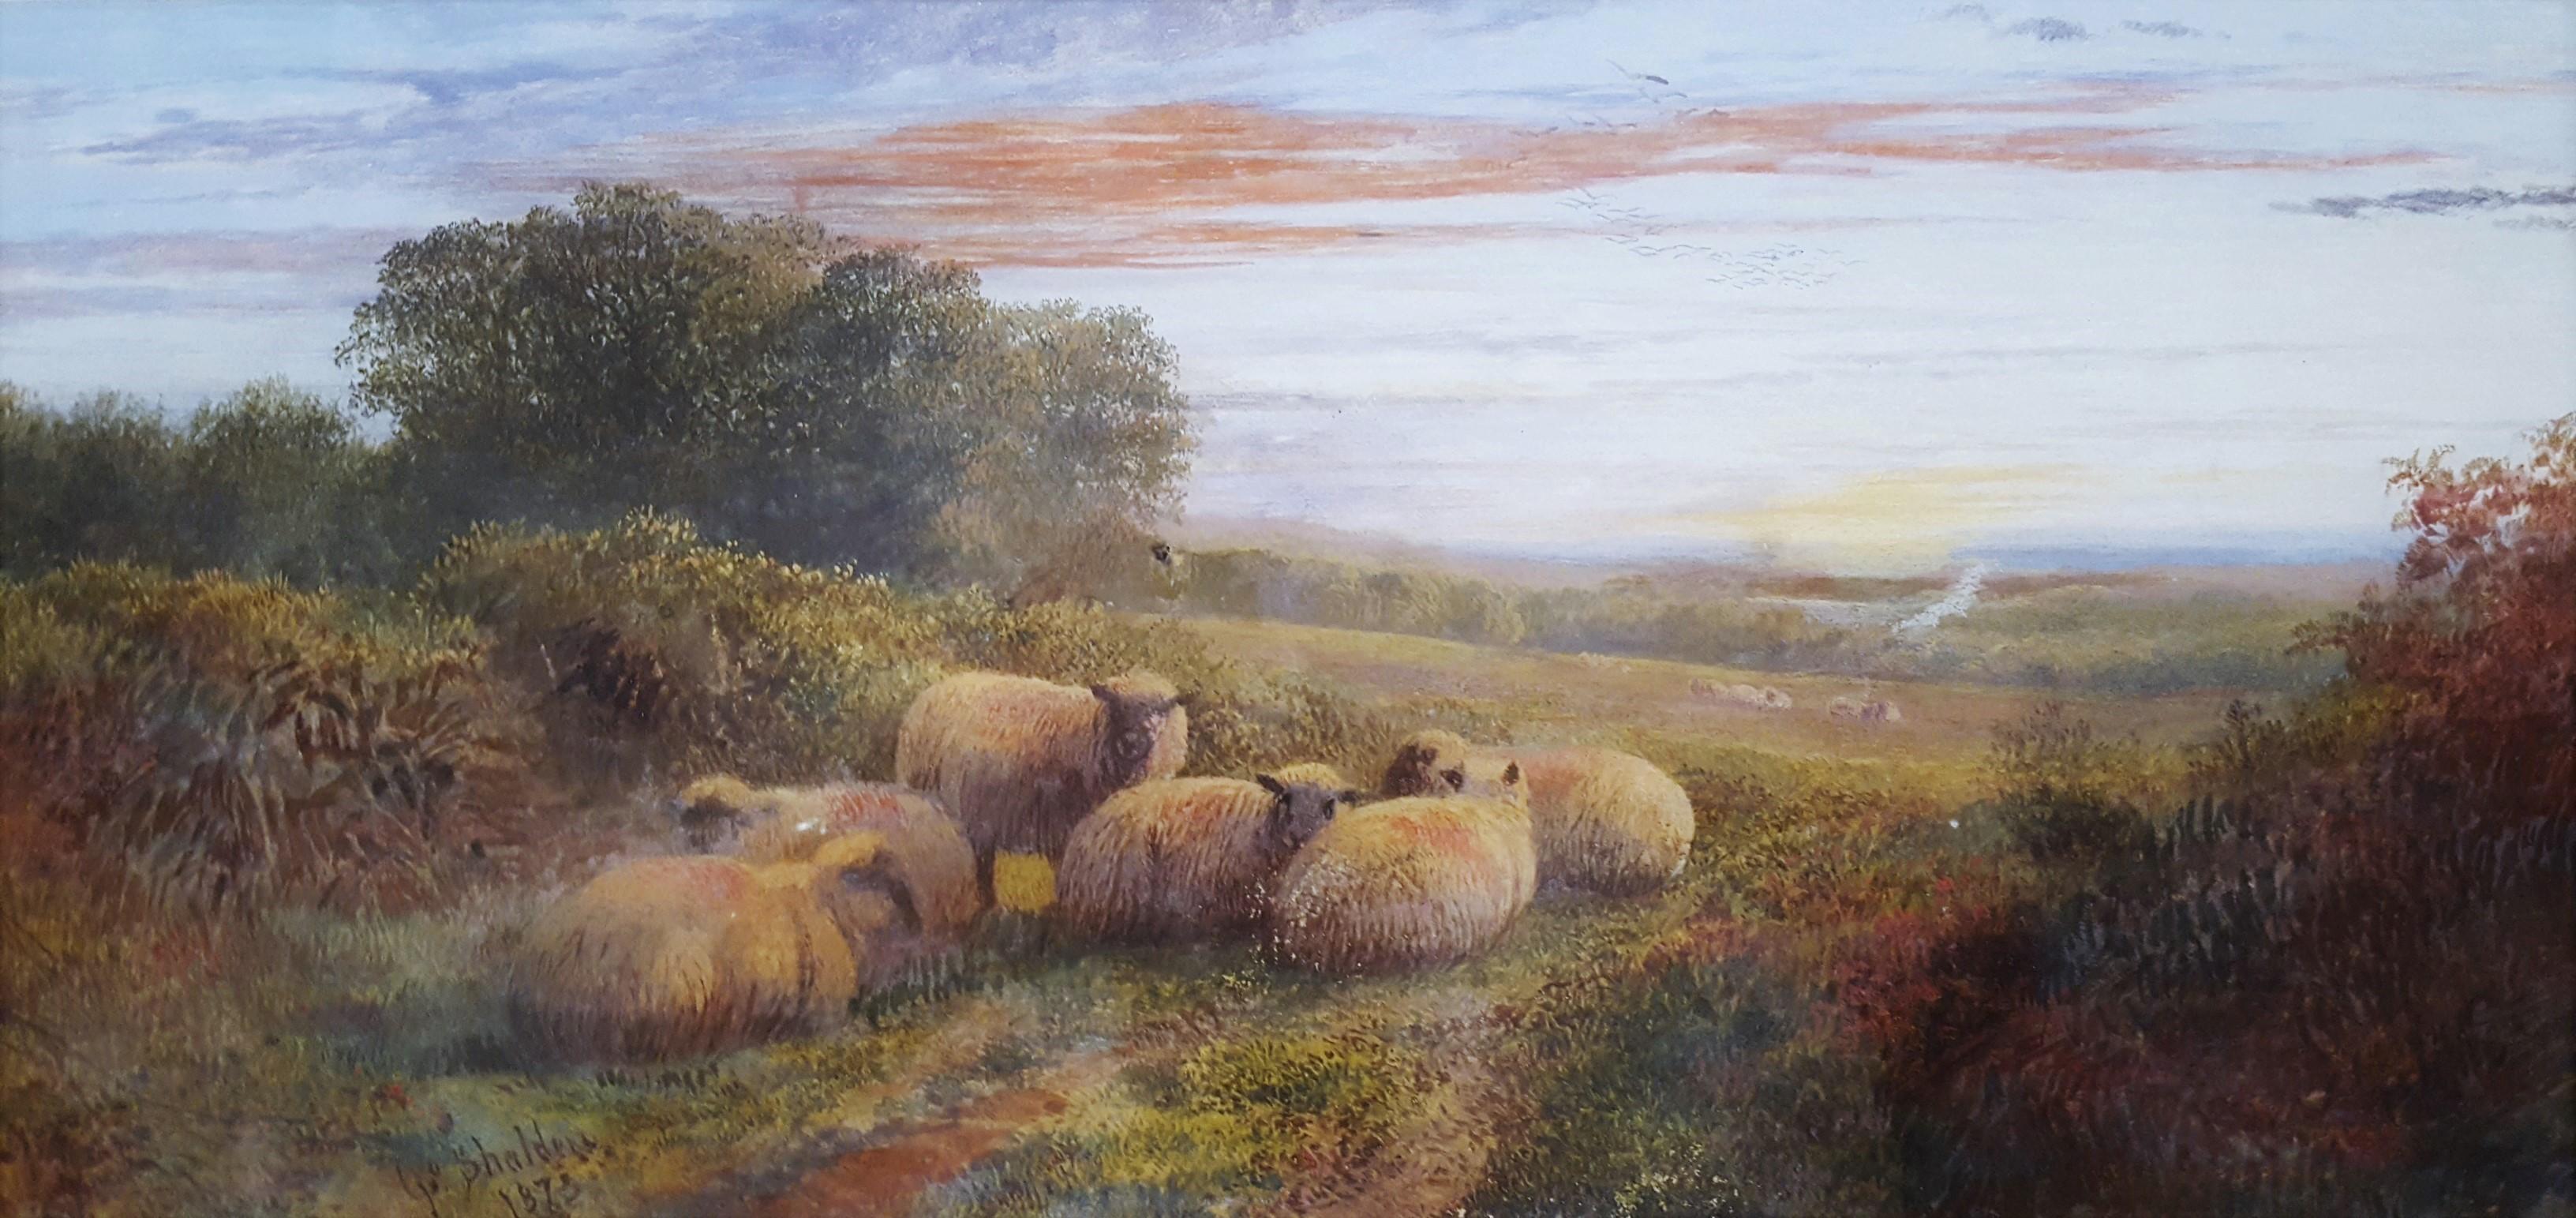 George Shalders Animal Painting - Sheep in Landscape at Dusk